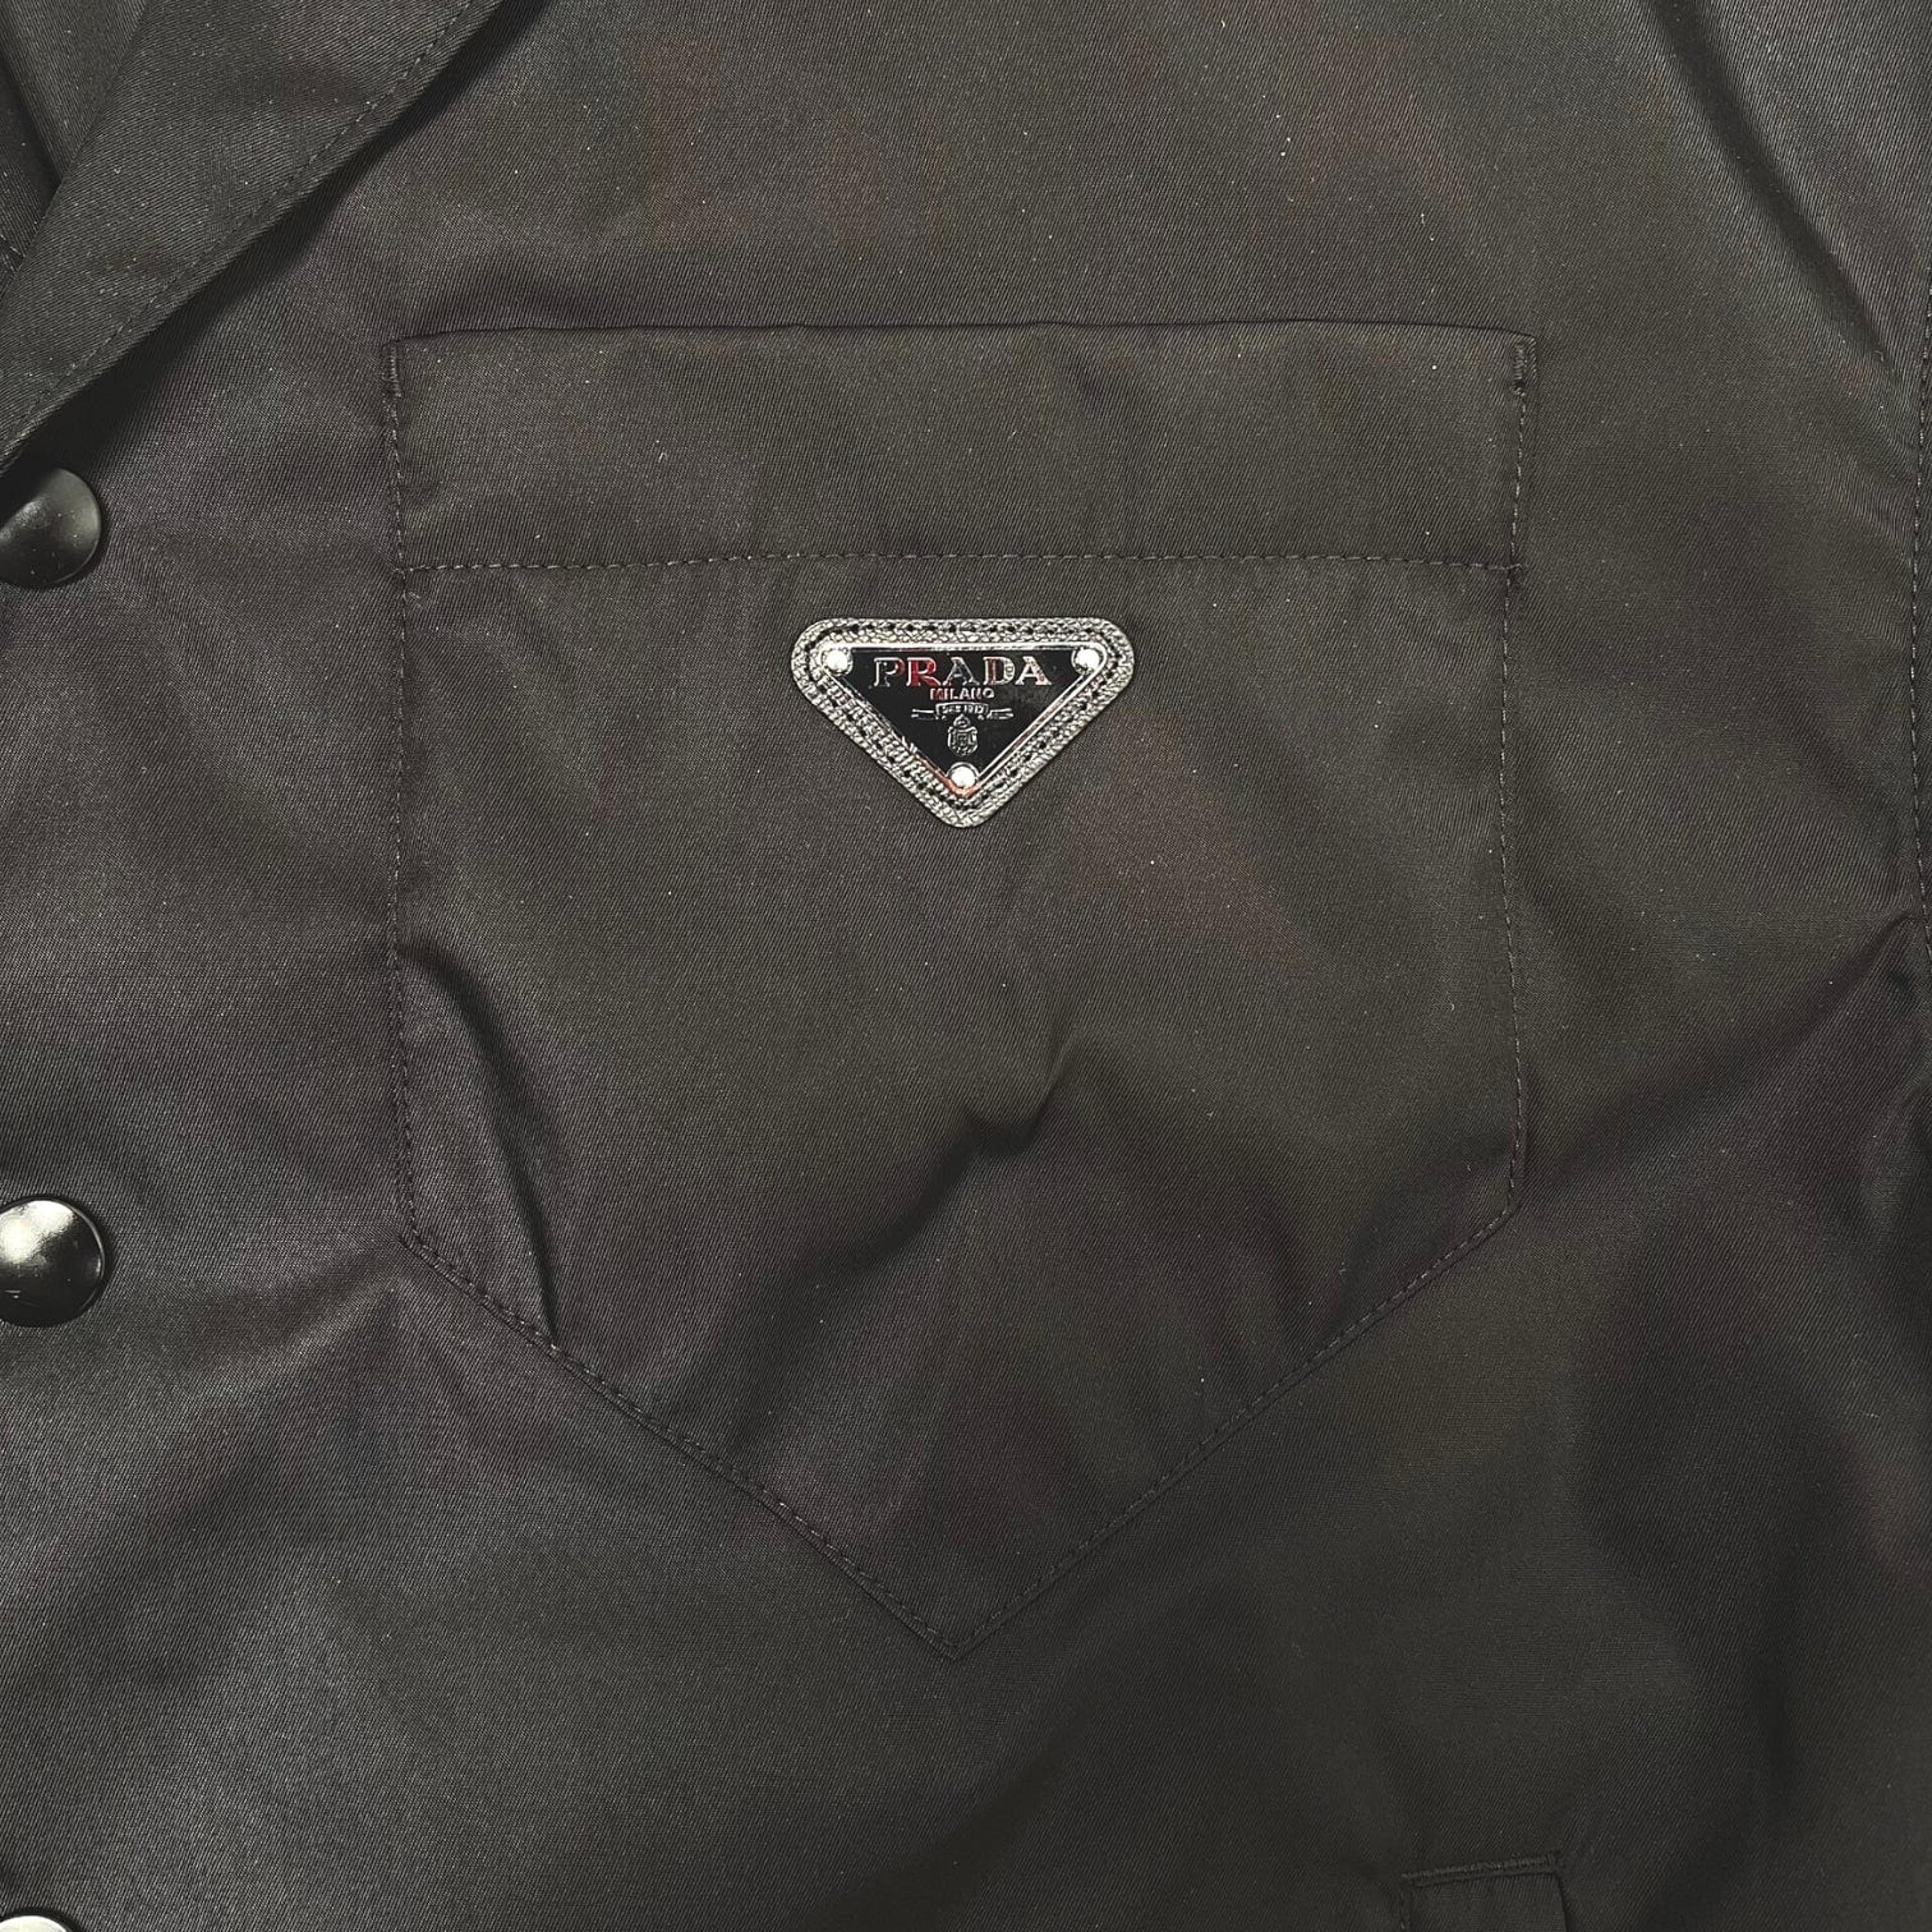 Alternate View 2 of Prada Re-Nylon Button Up Short Sleeve Tee Shirt Black Pre-Owned